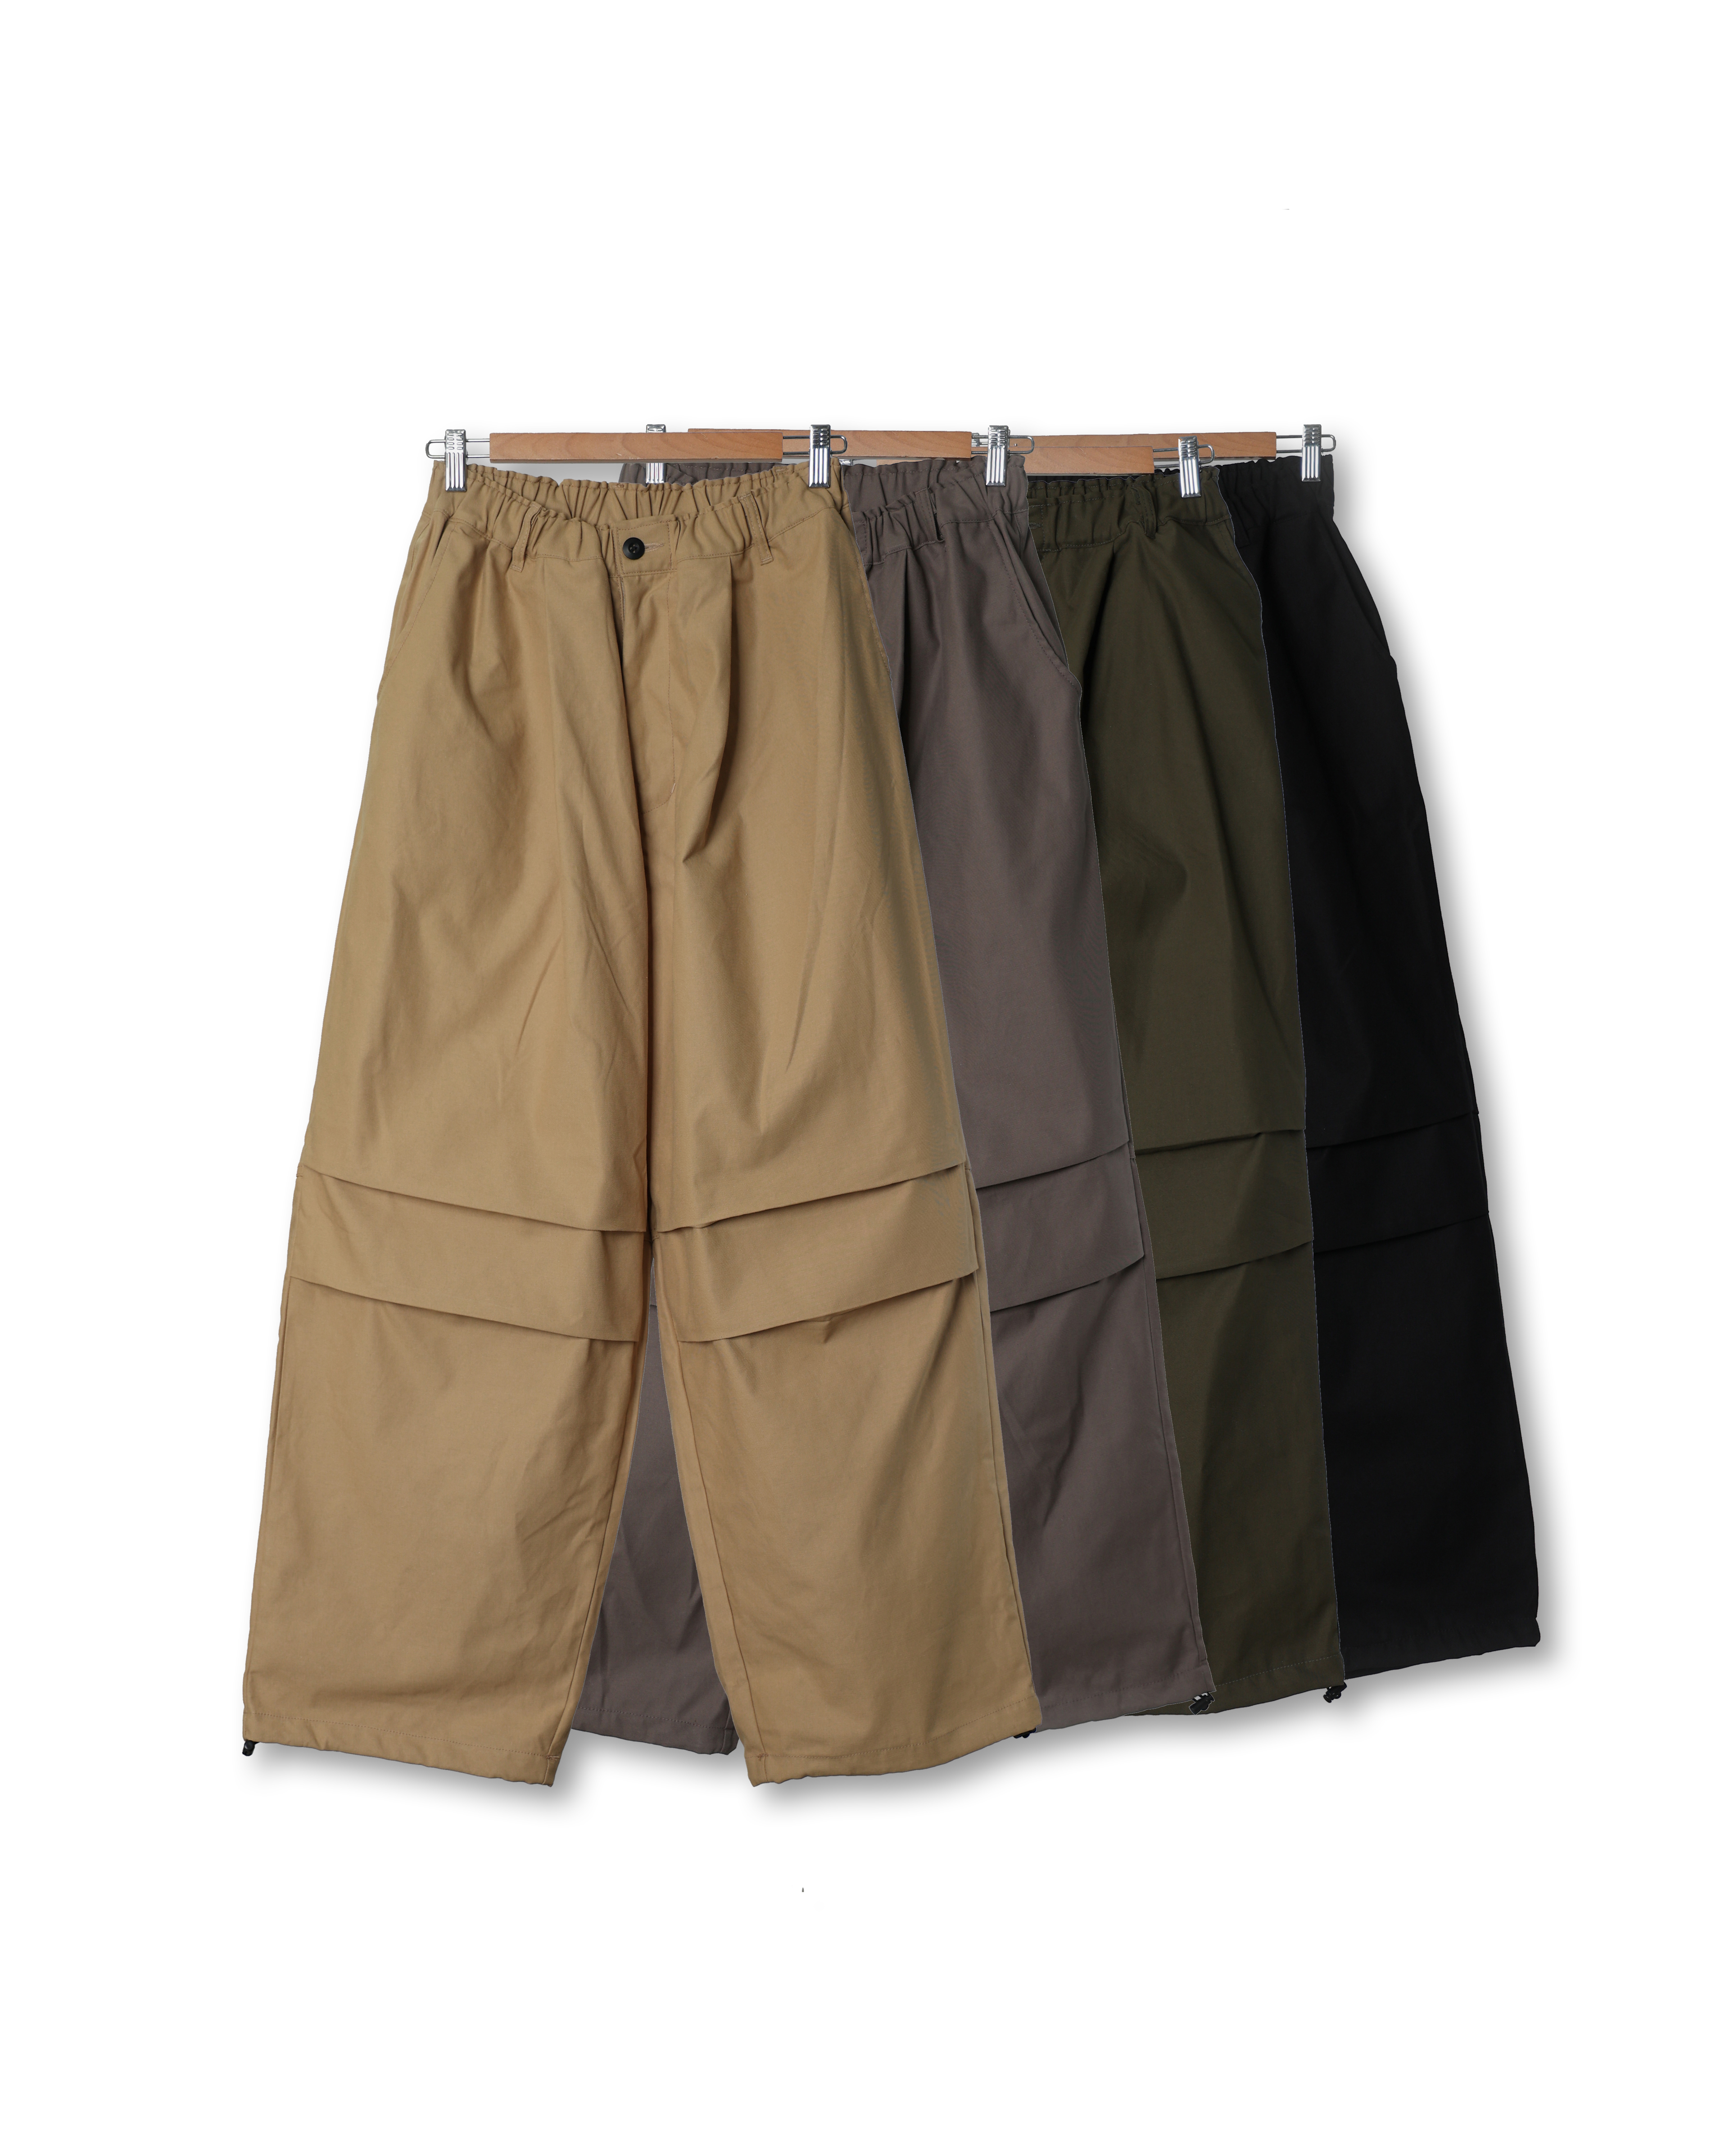 WAOT Bulky Cotton Parachute Pants (Black/Olive/Gray/Beige) - 15차 리오더 (그레이 5/9 배송예정)